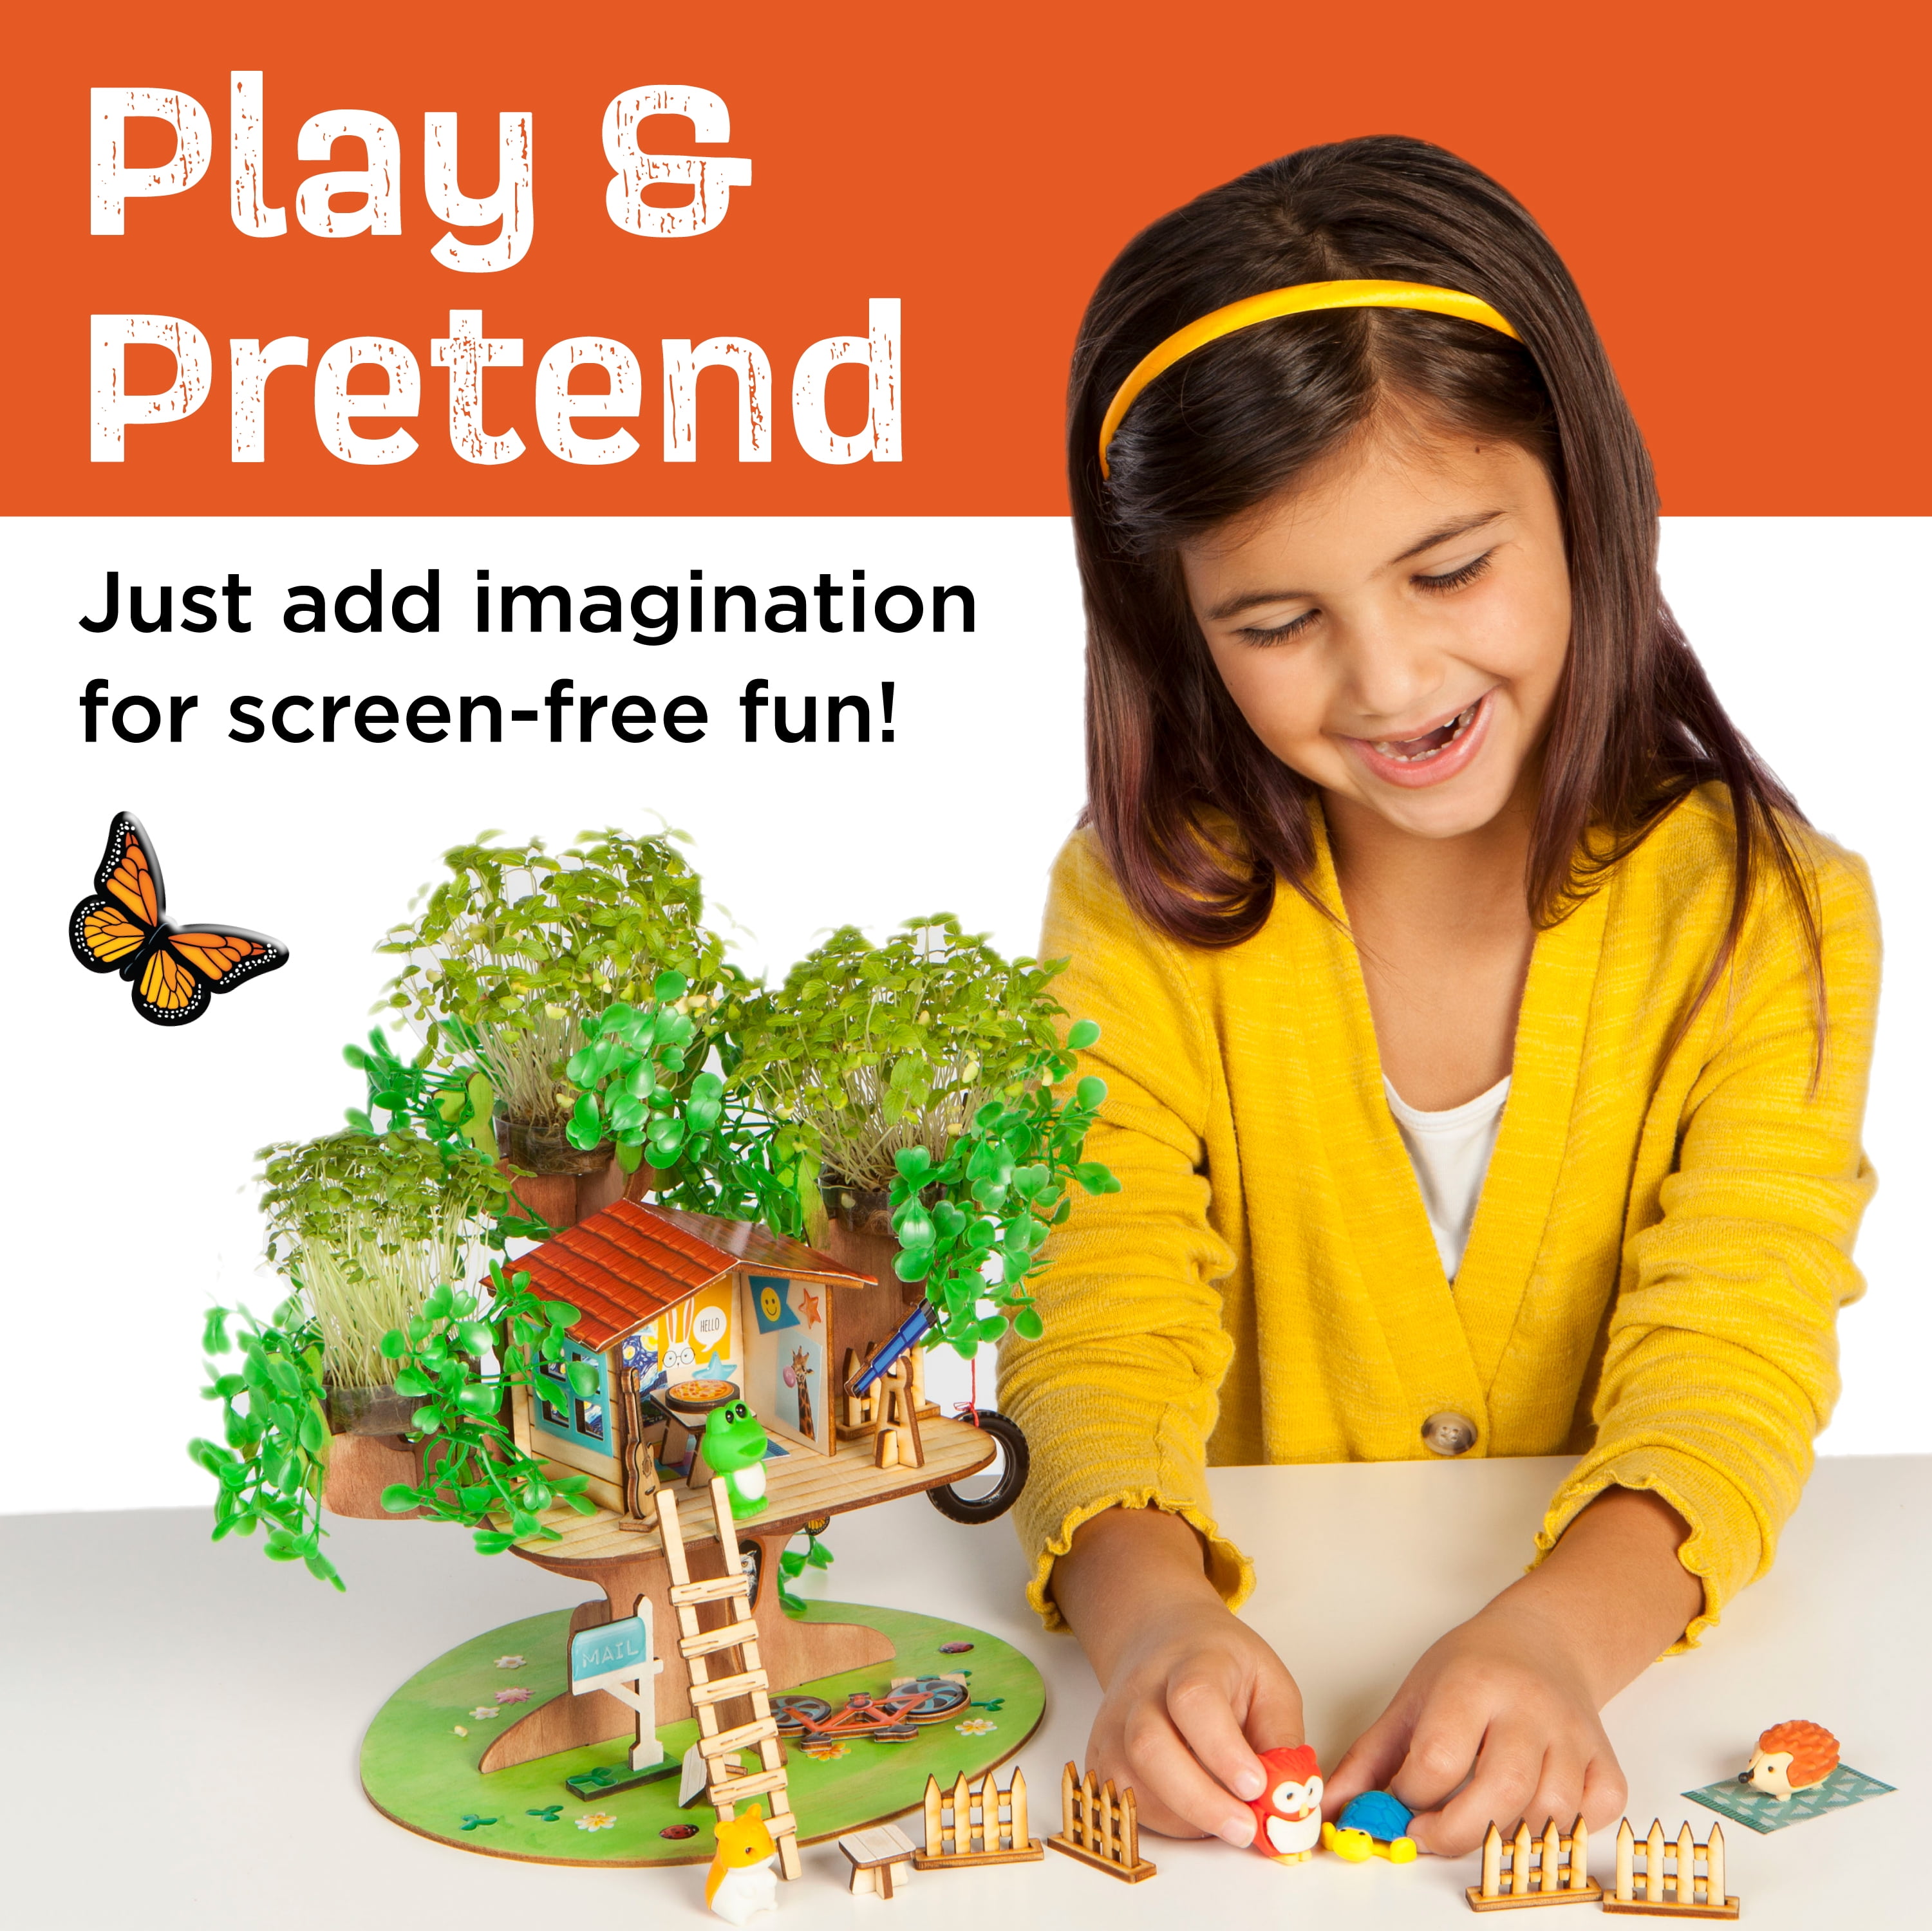  Avenir Crayon Activity Kit, Play at Tree House, Eco Beeswax  Crayons